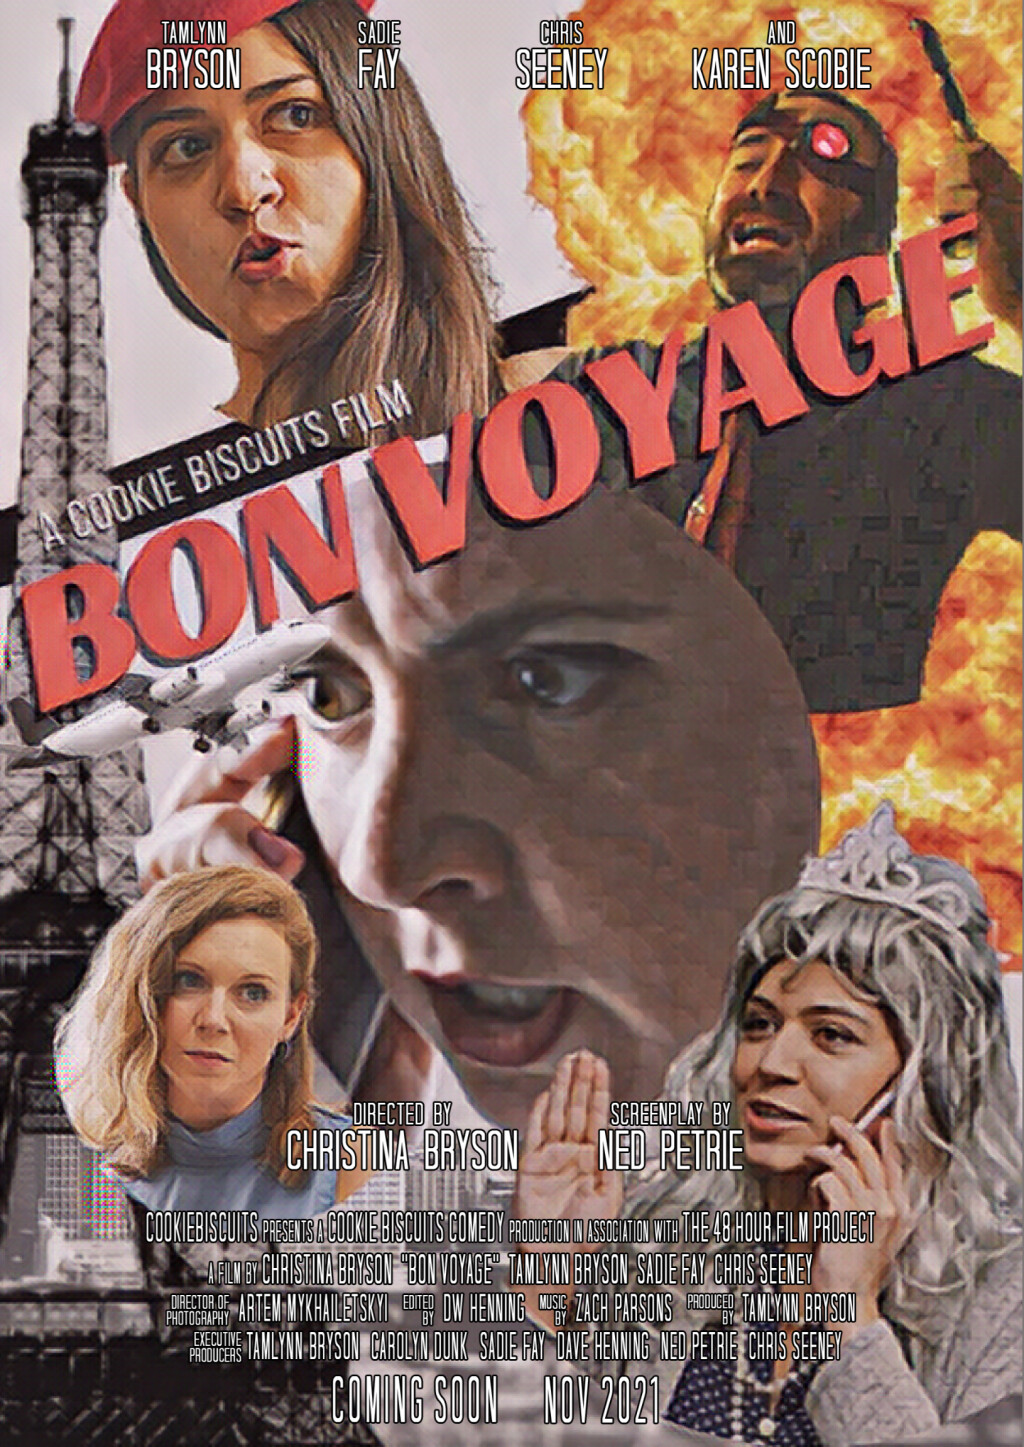 Filmposter for Bon Voyage